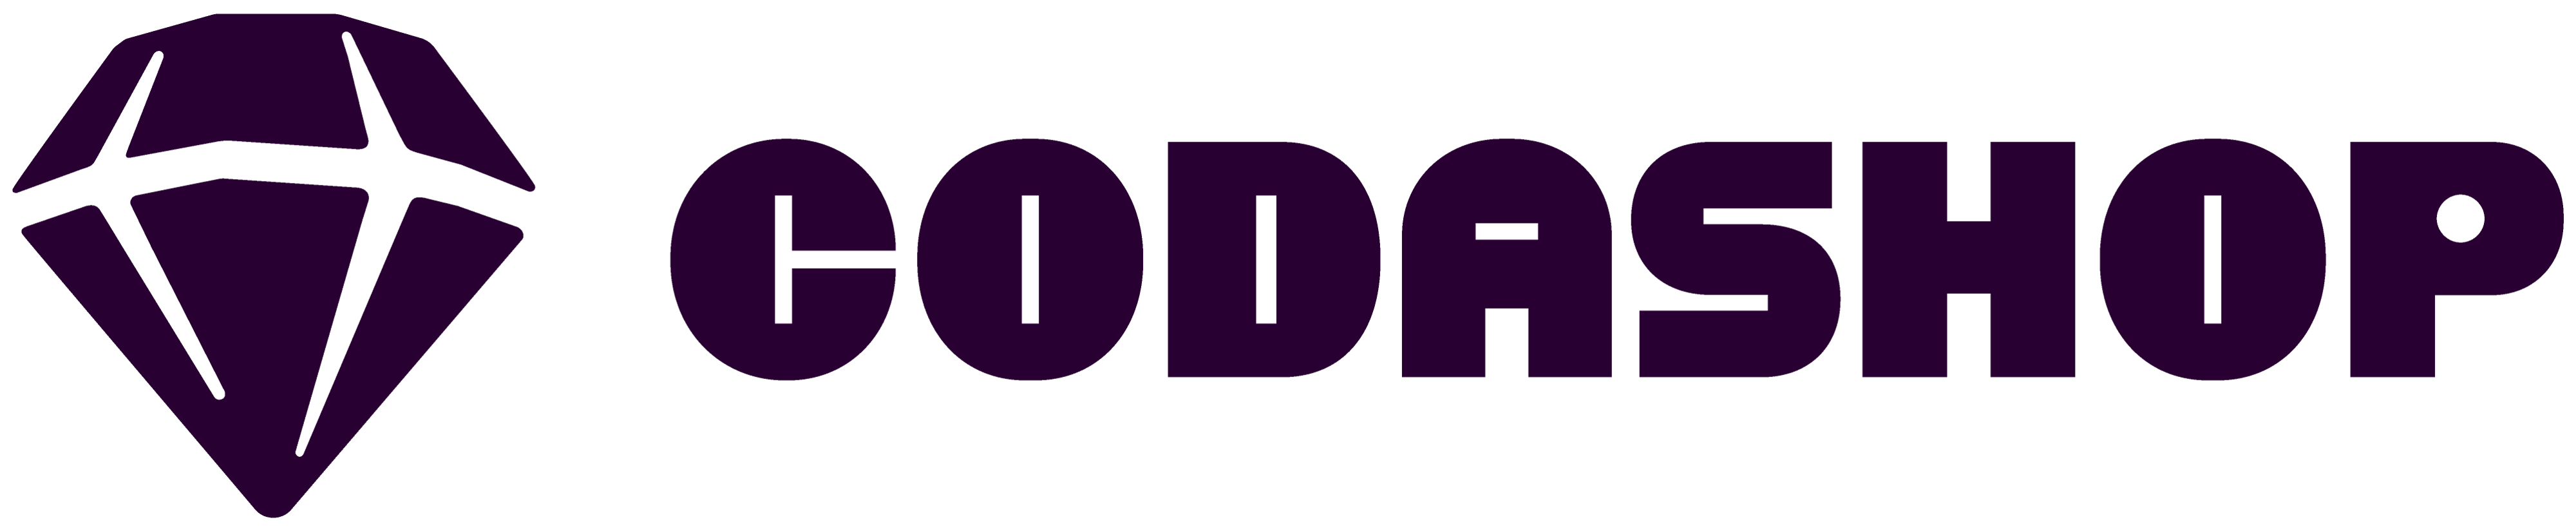 Codashop-logo-horisontal-dark-matter__2_.png